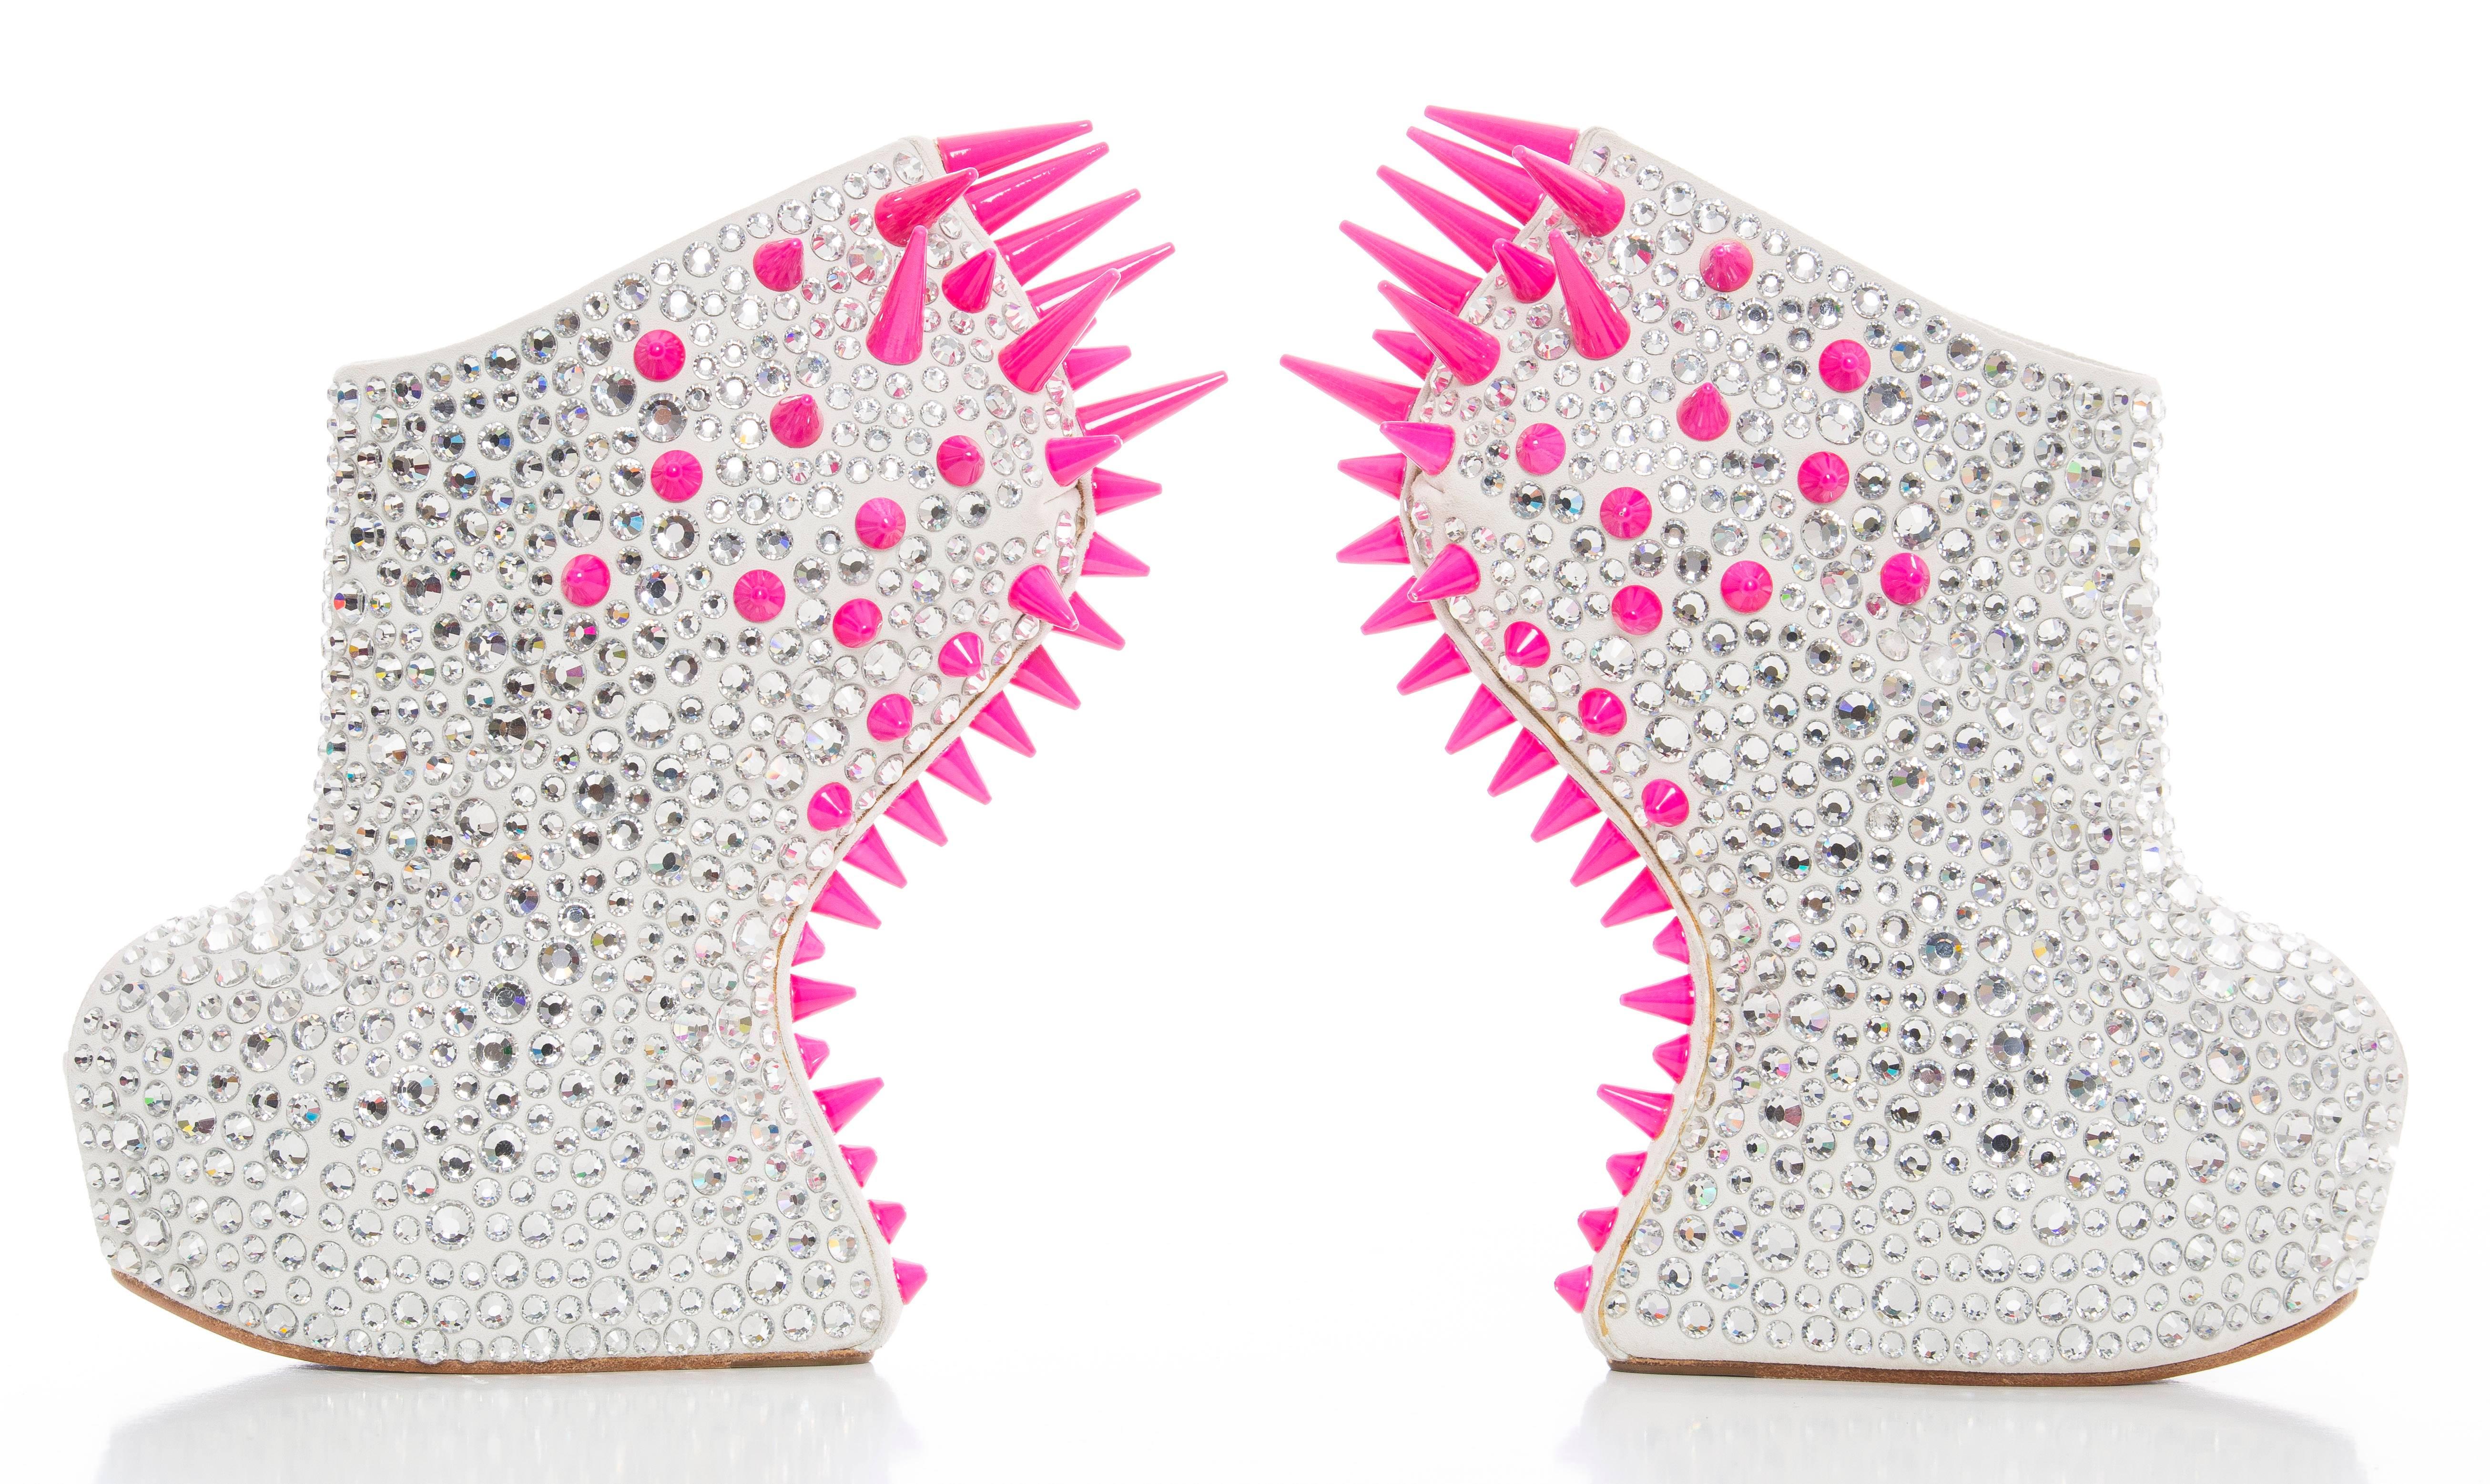 Guiseppe Zanotti Swarovski Crystal & Pink Spiked-Embellished Wedges Fall 2012 For Sale 3